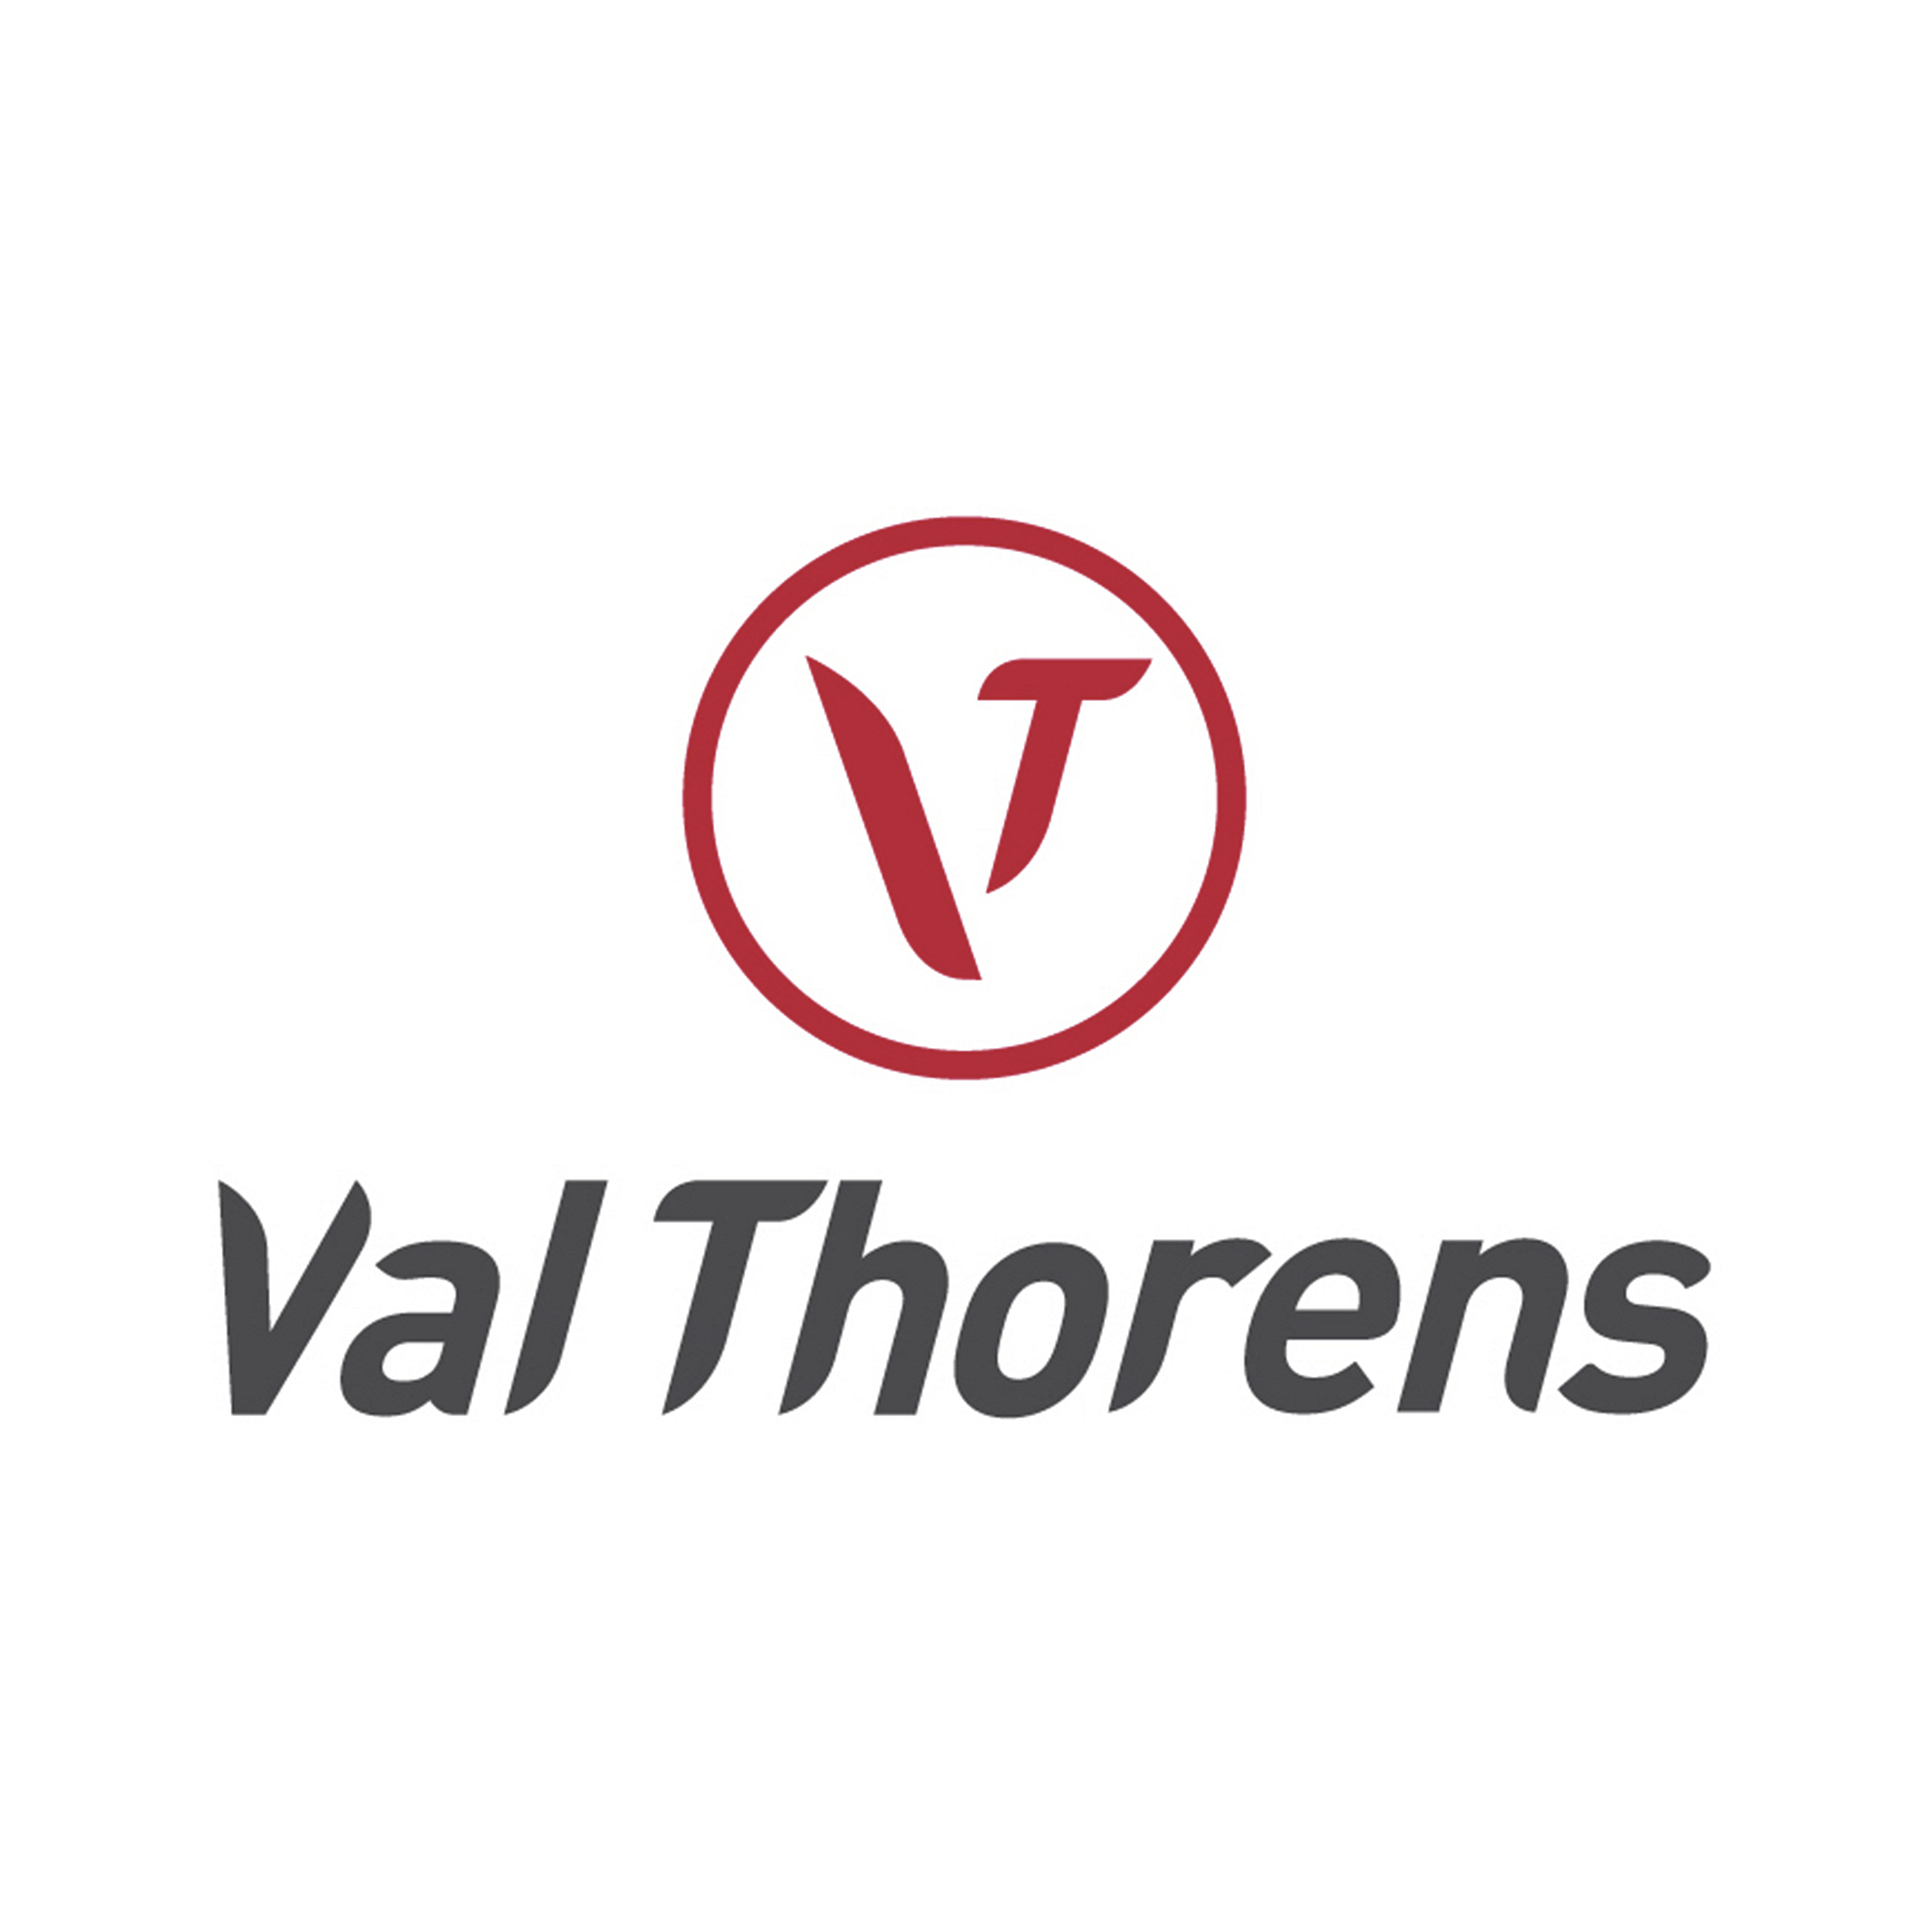 val-thorens-logo